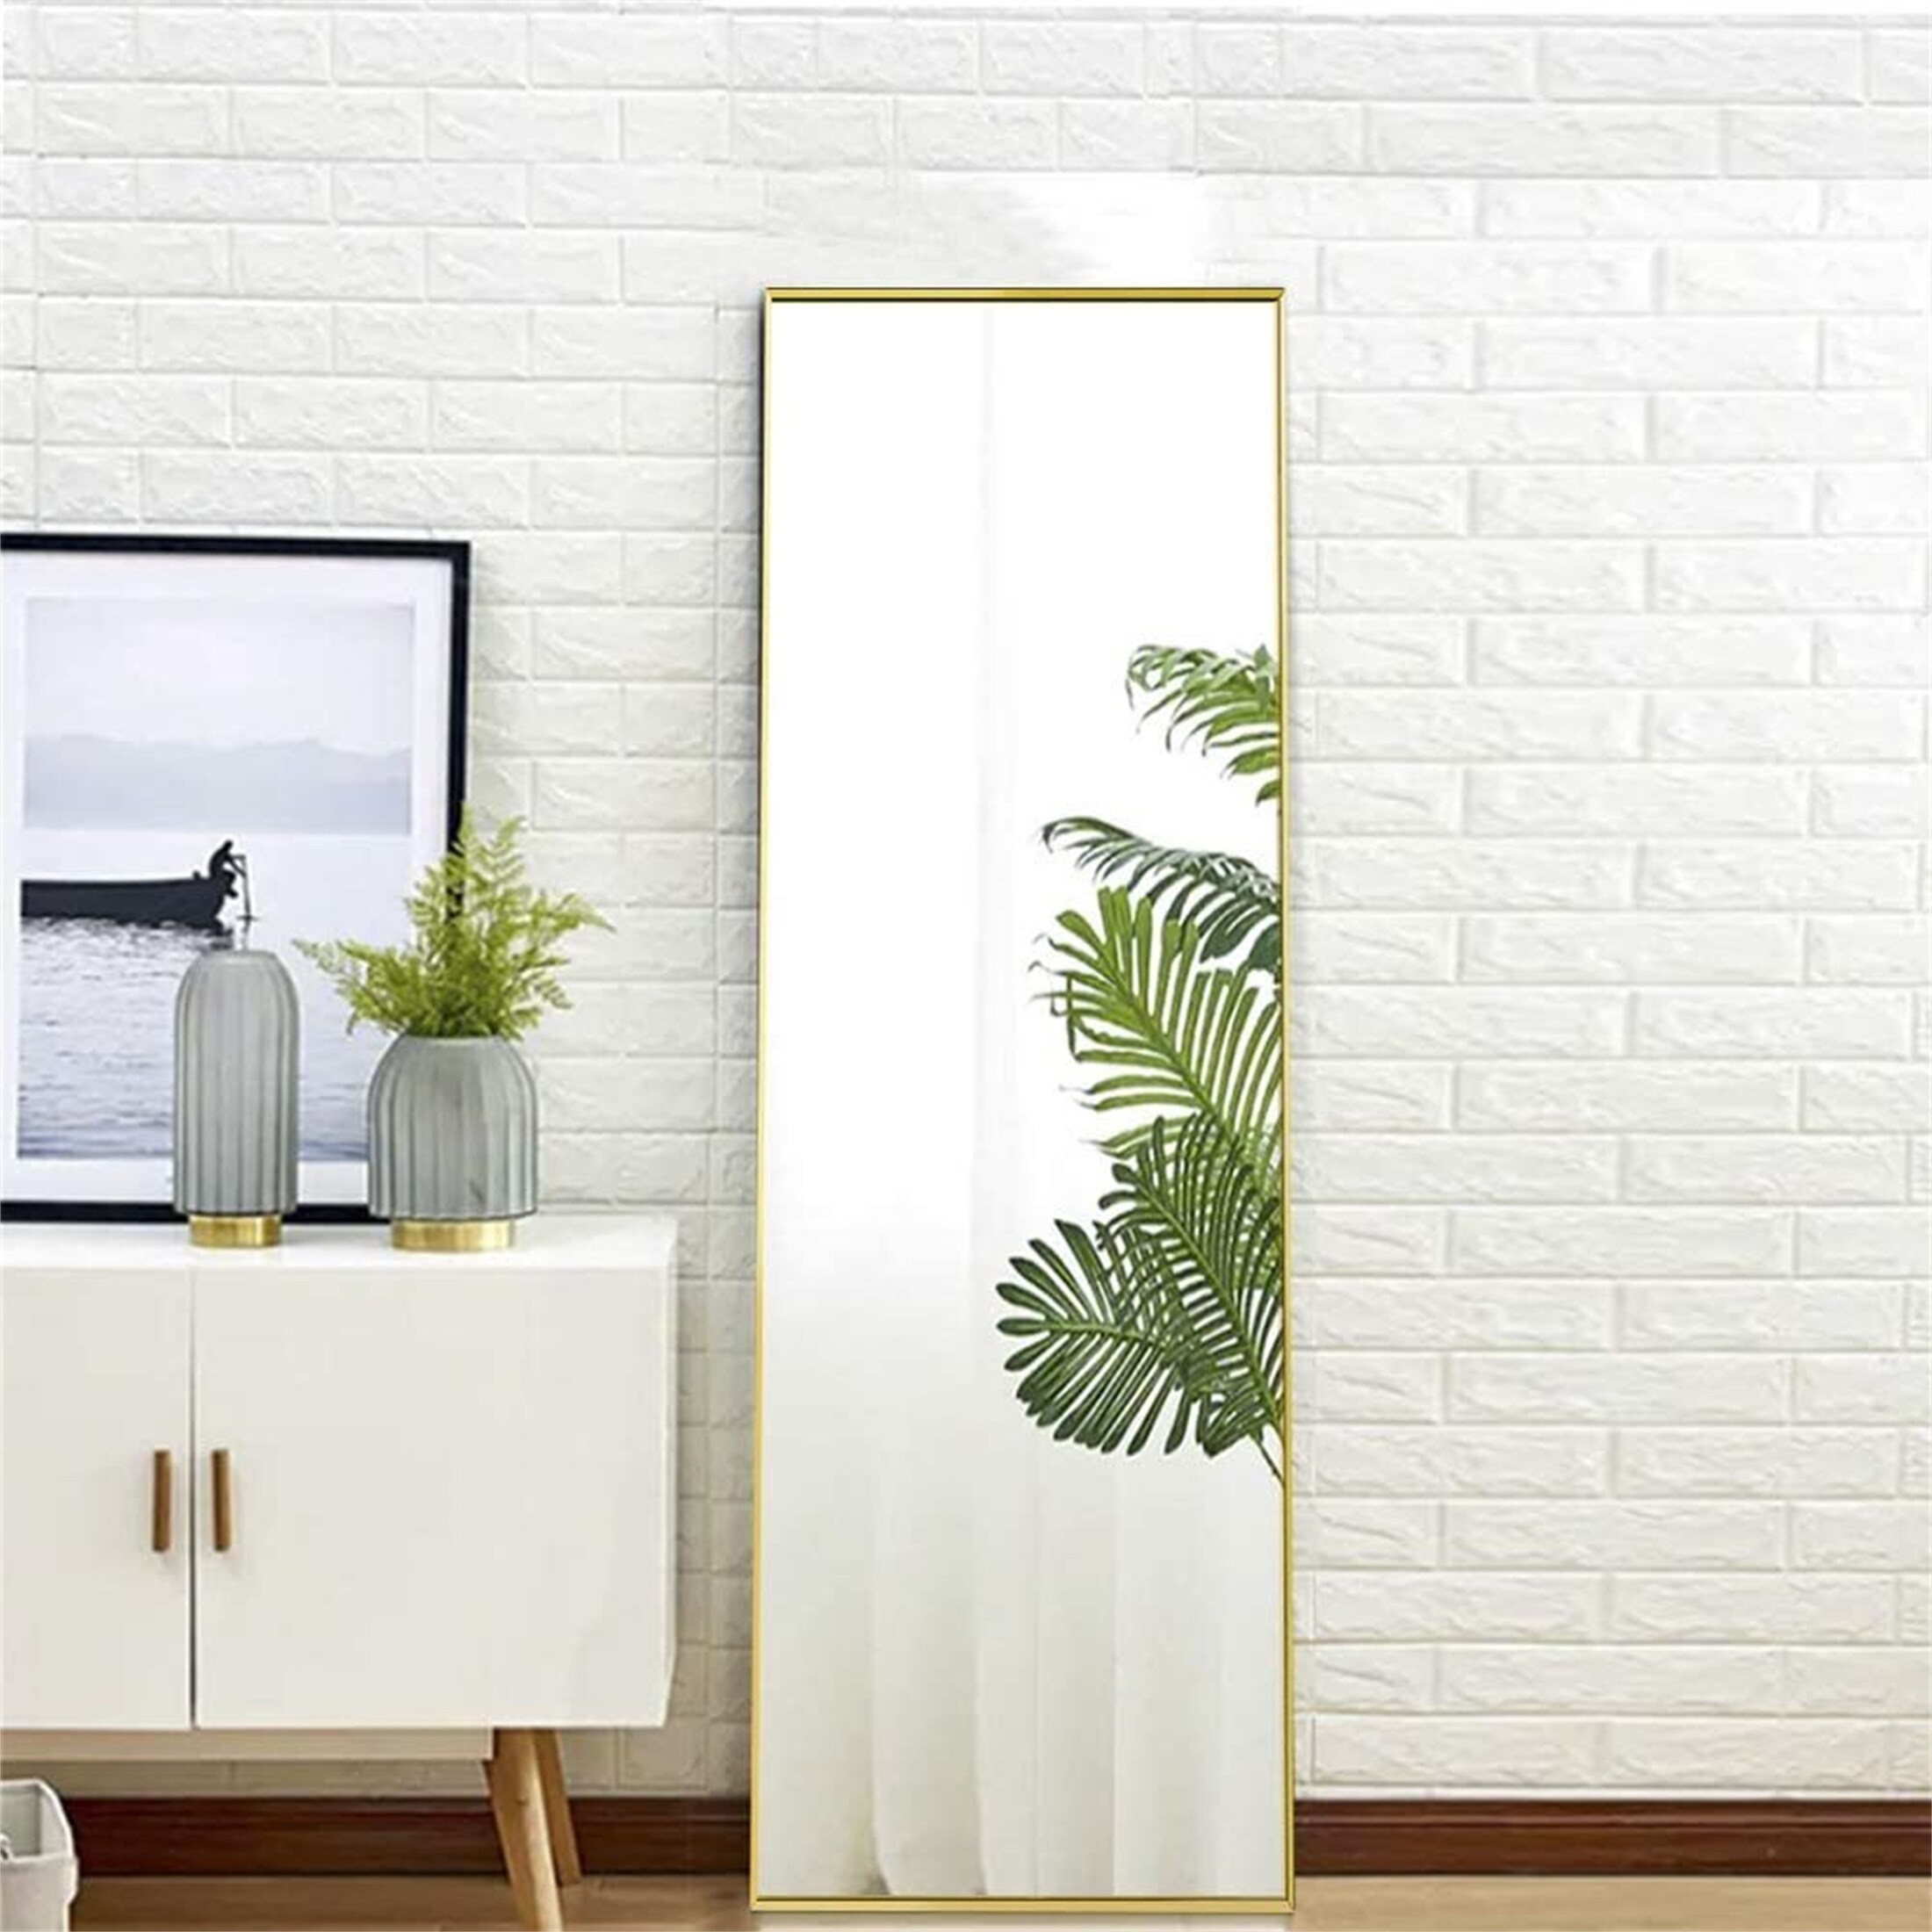 Gold Full Length Floor Mirror with Aluminum Frame for Wall Mounted, St –  Vanller Shop